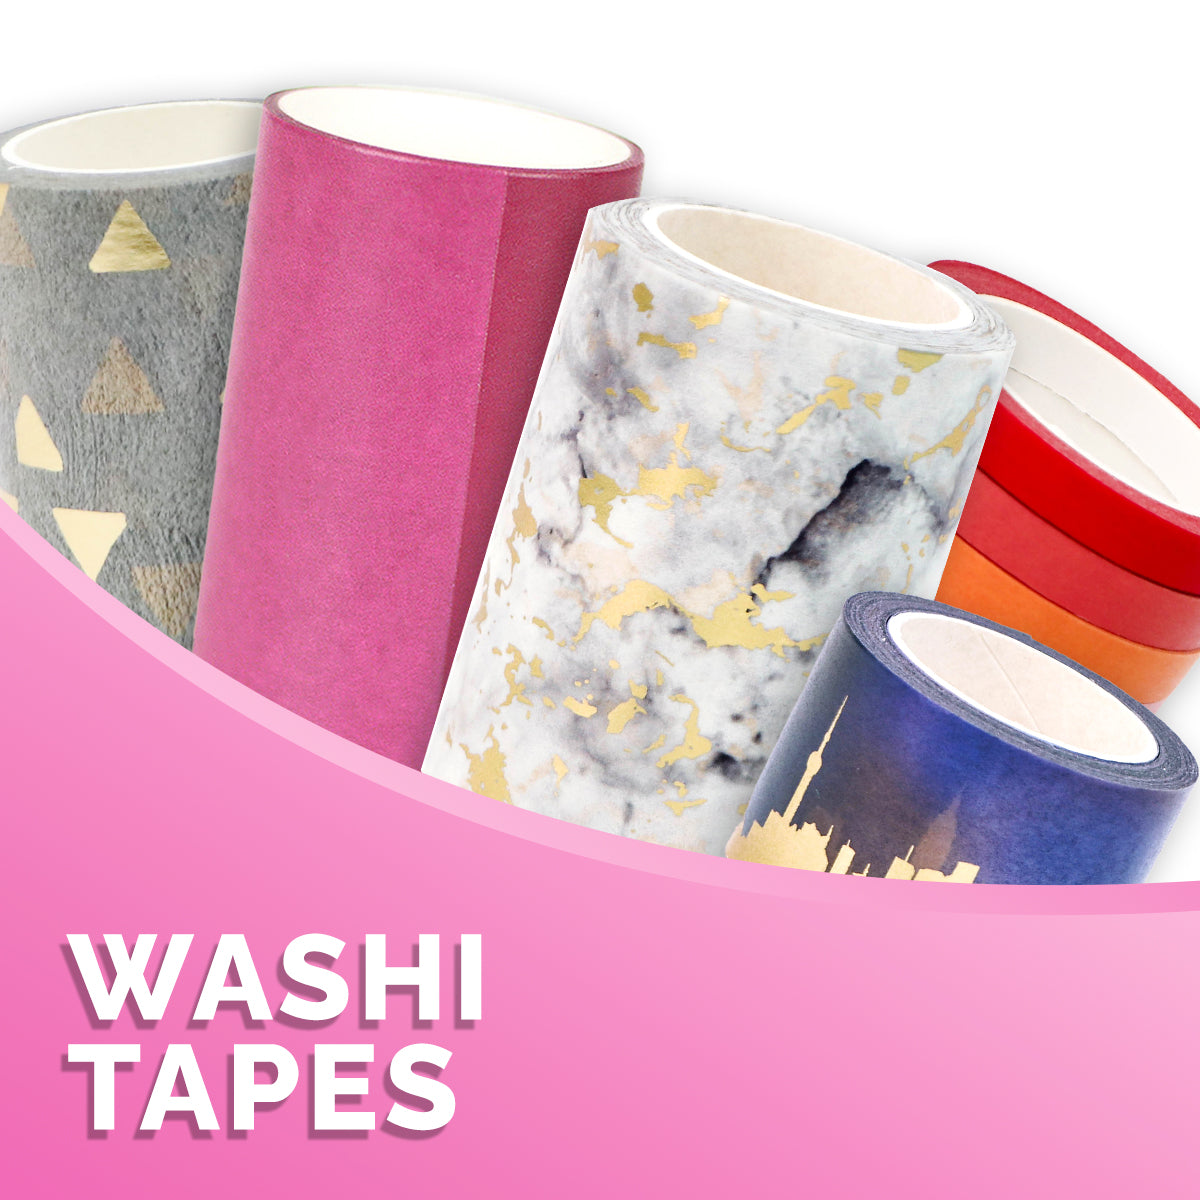 Altenew Swirlies in Pink Washi Tape